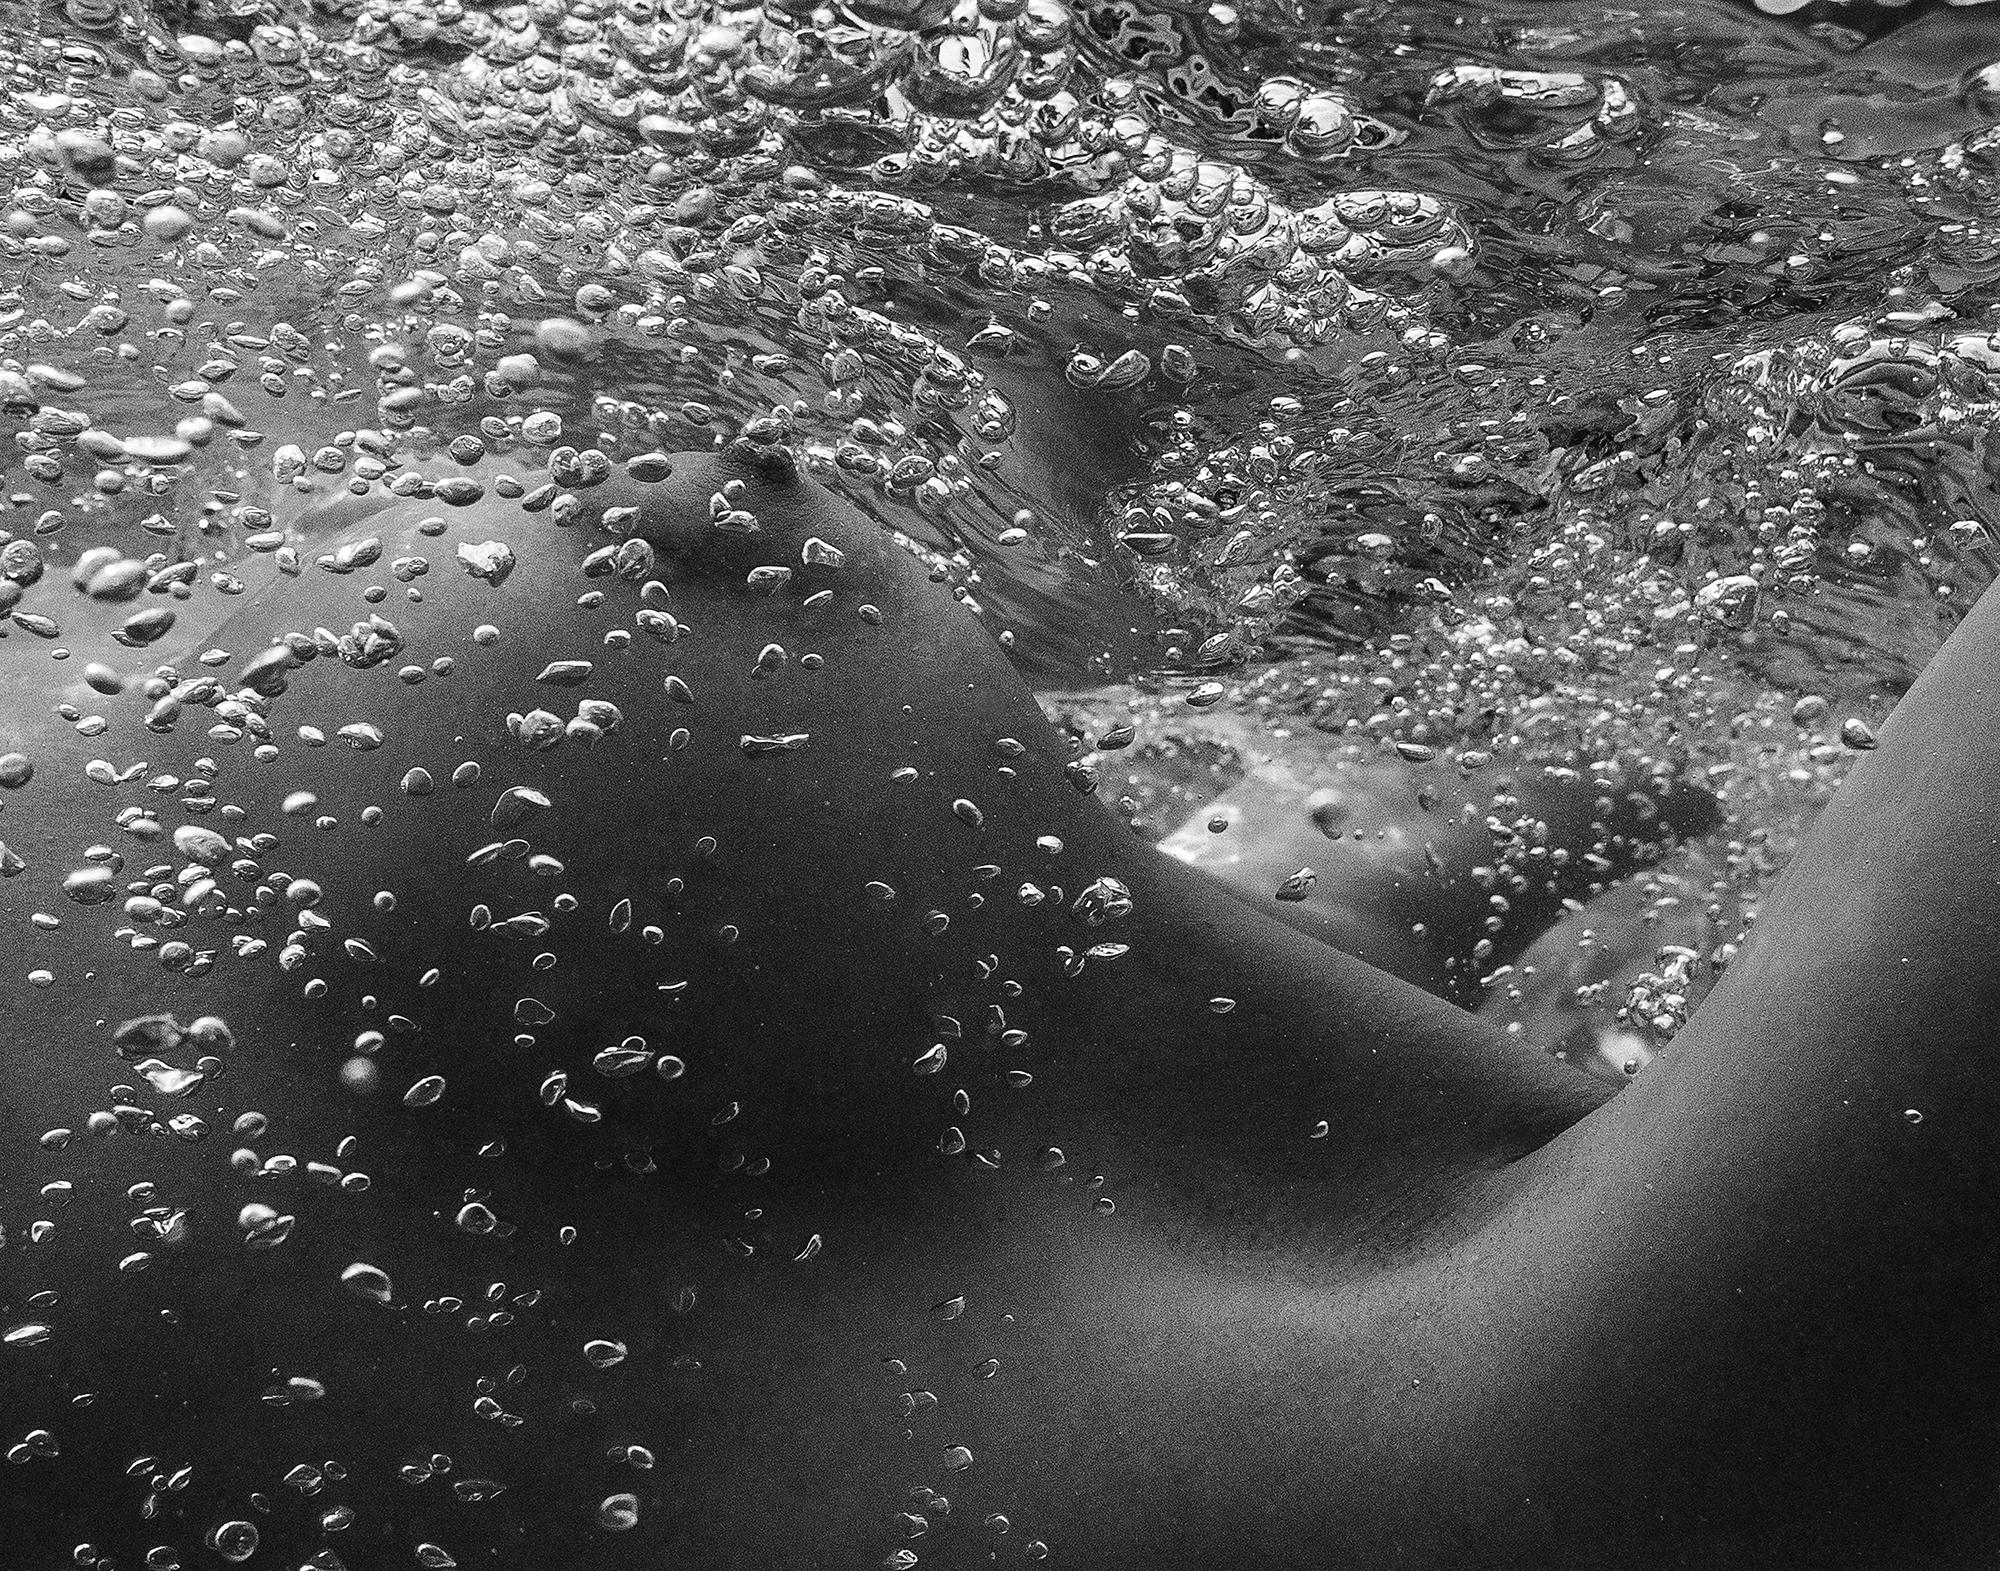 Bubbles - underwater photograph - archival pigment print - Photograph by Alex Sher